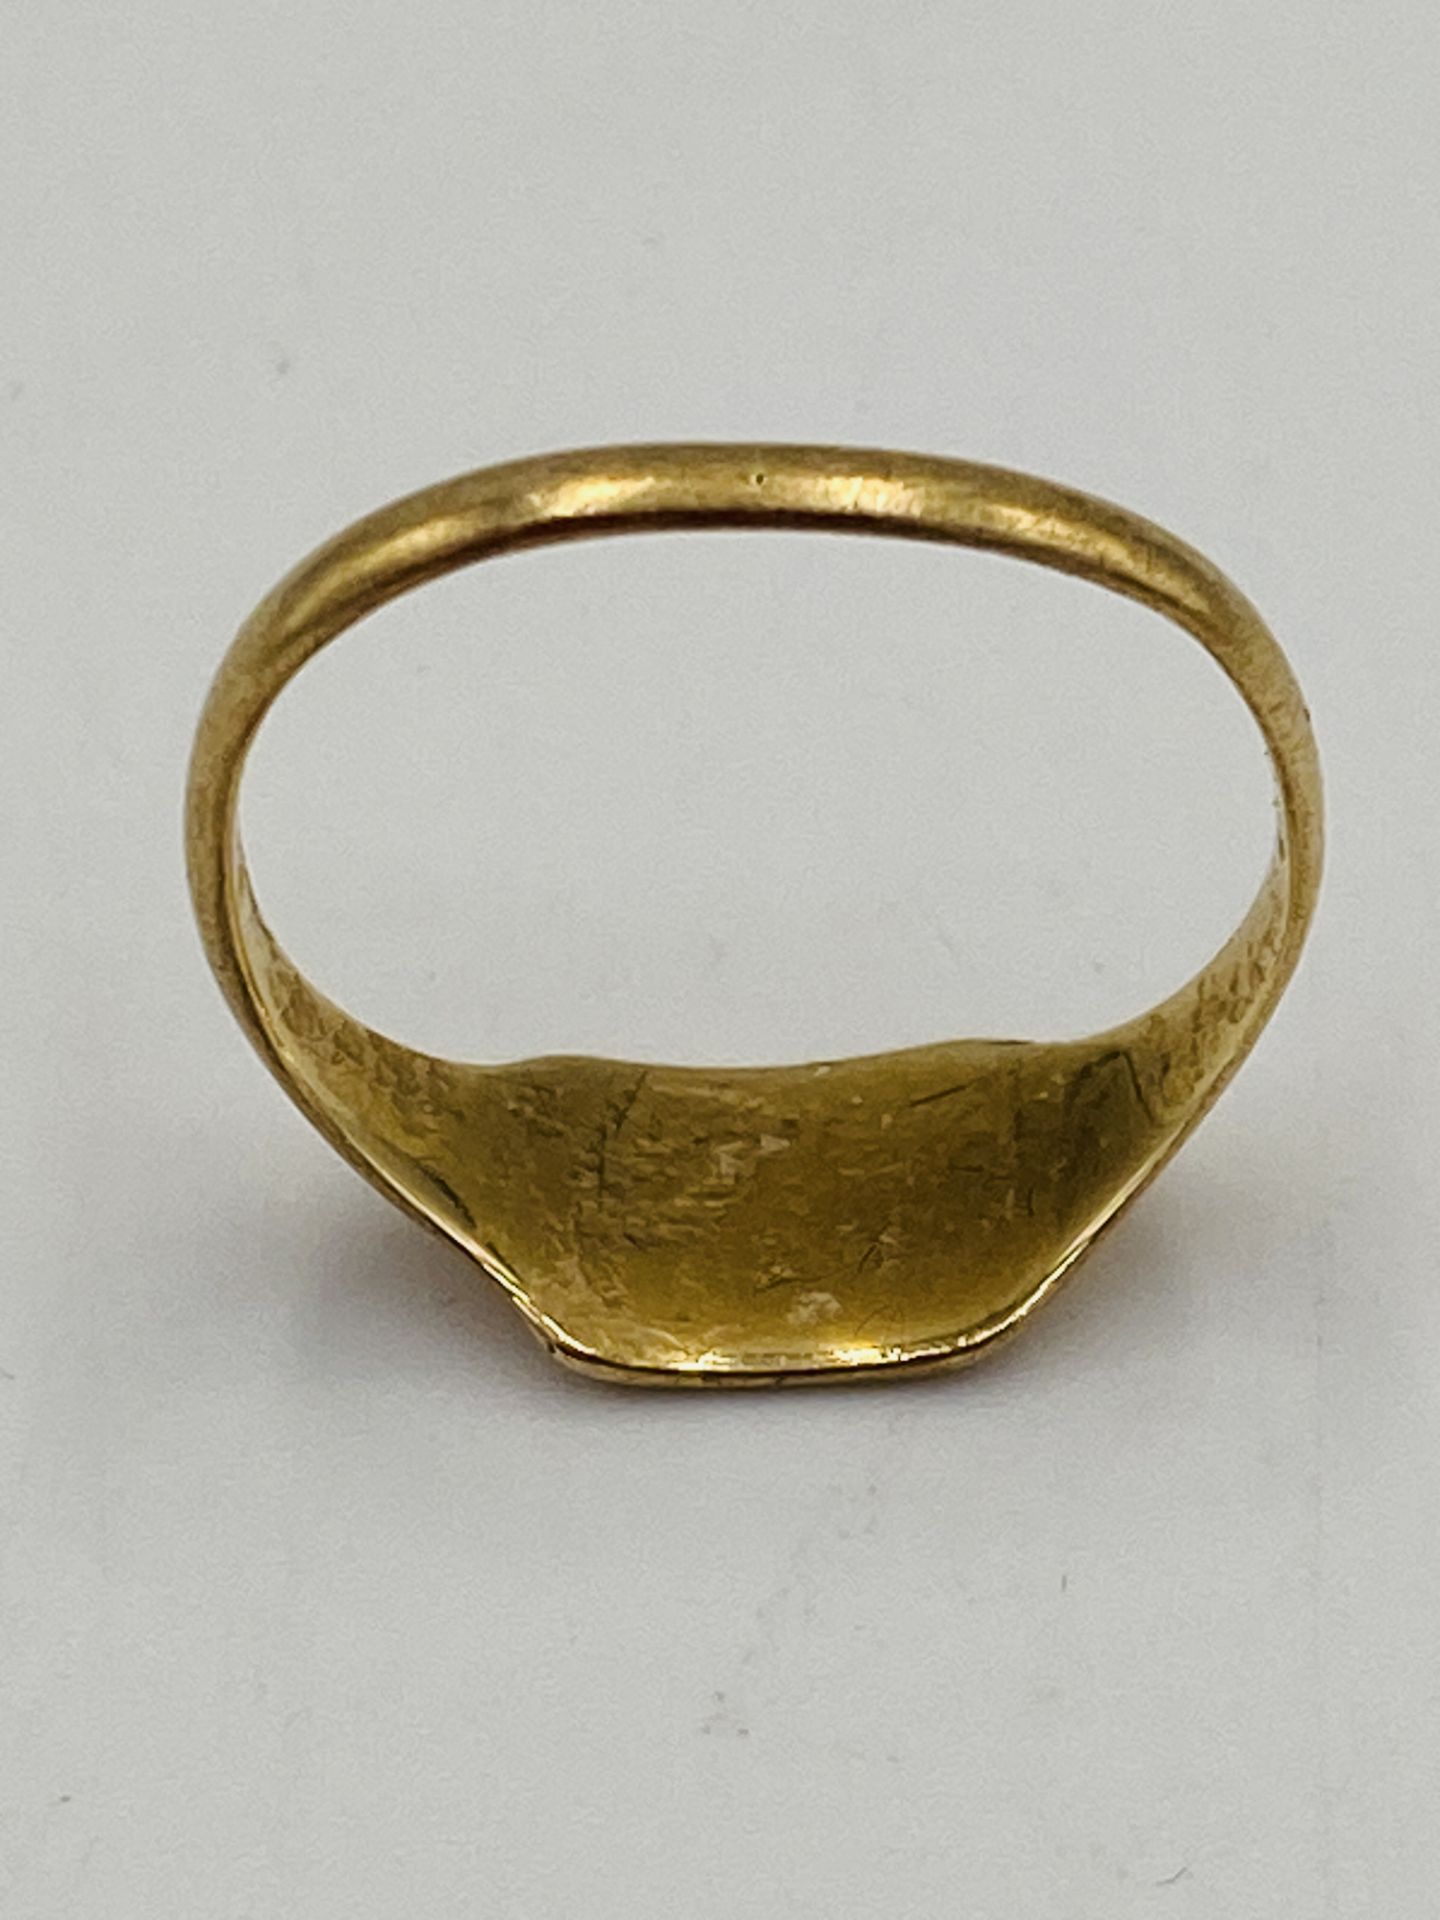 9ct gold signet ring - Image 3 of 5